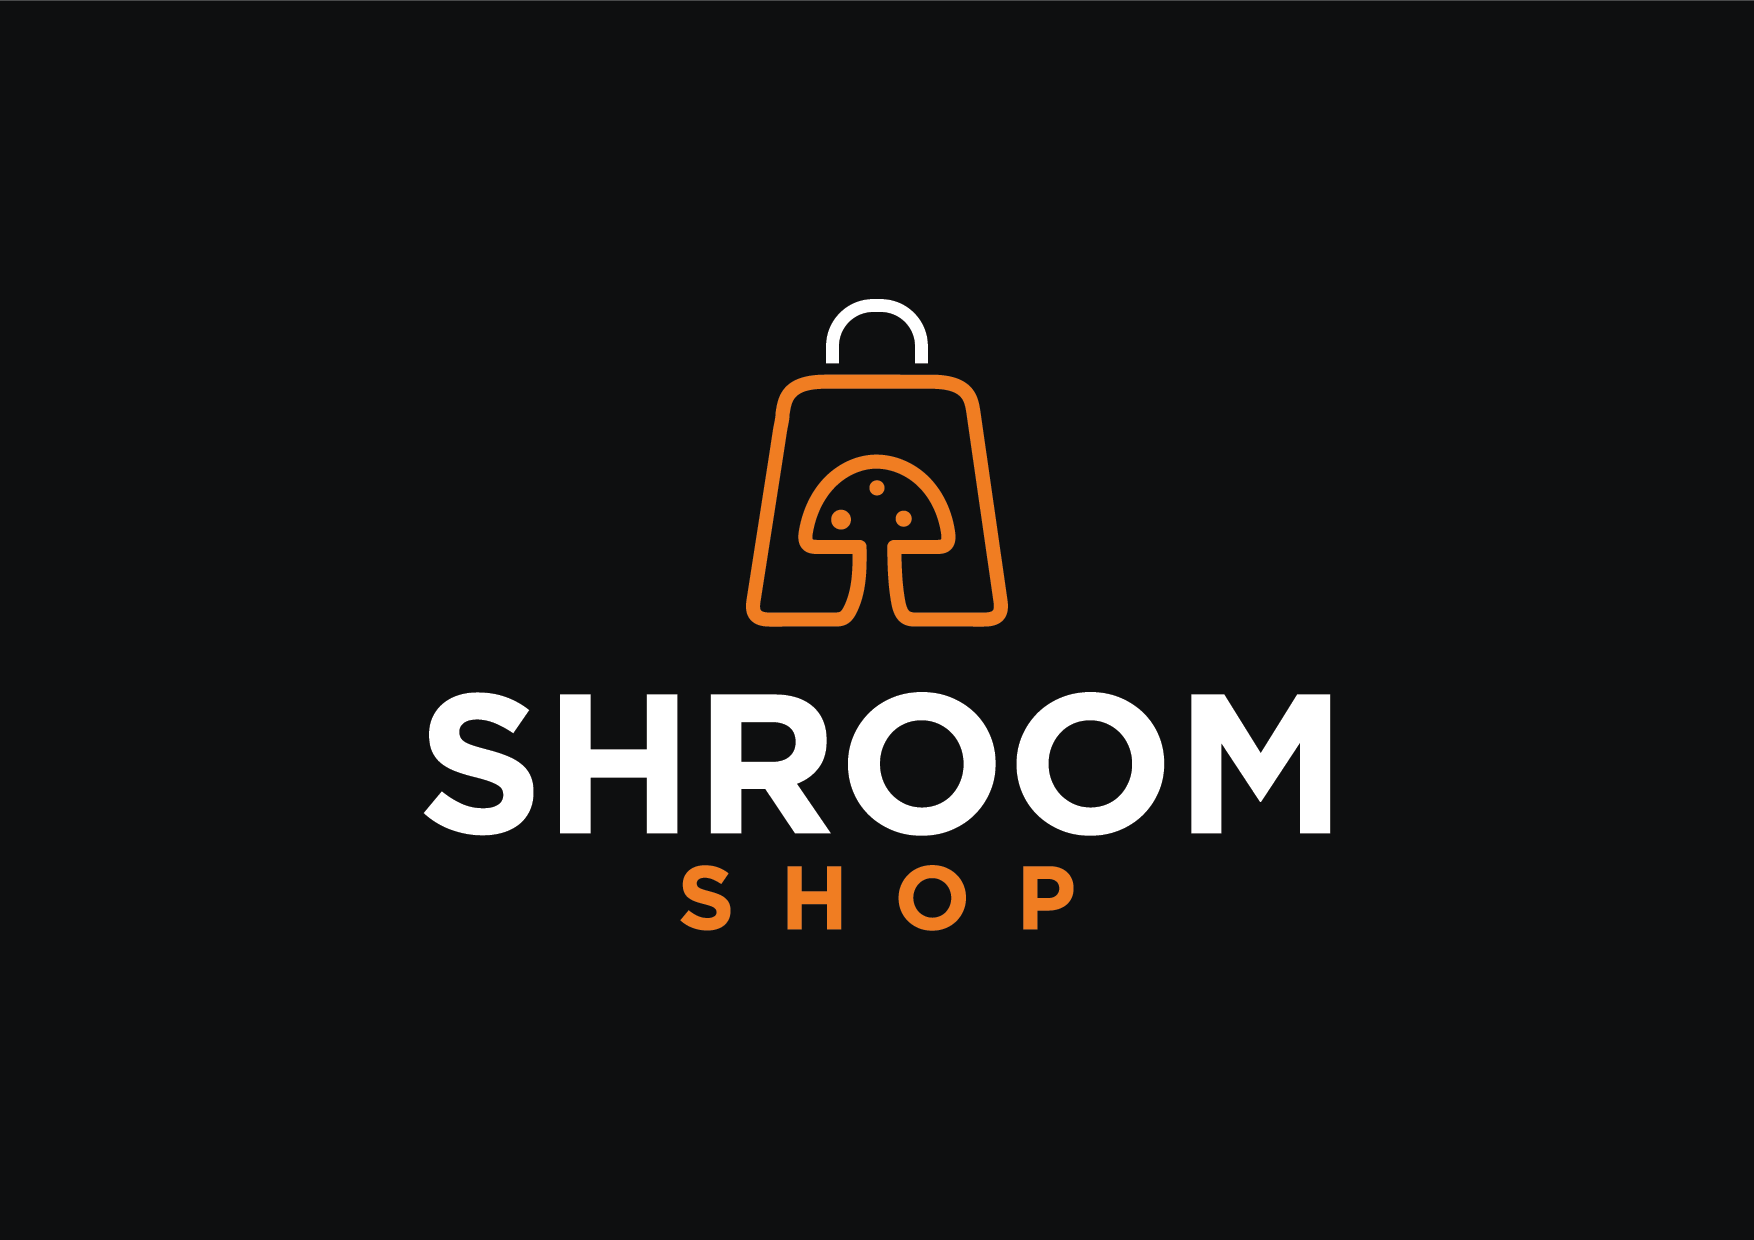 Mushroom domains for sale